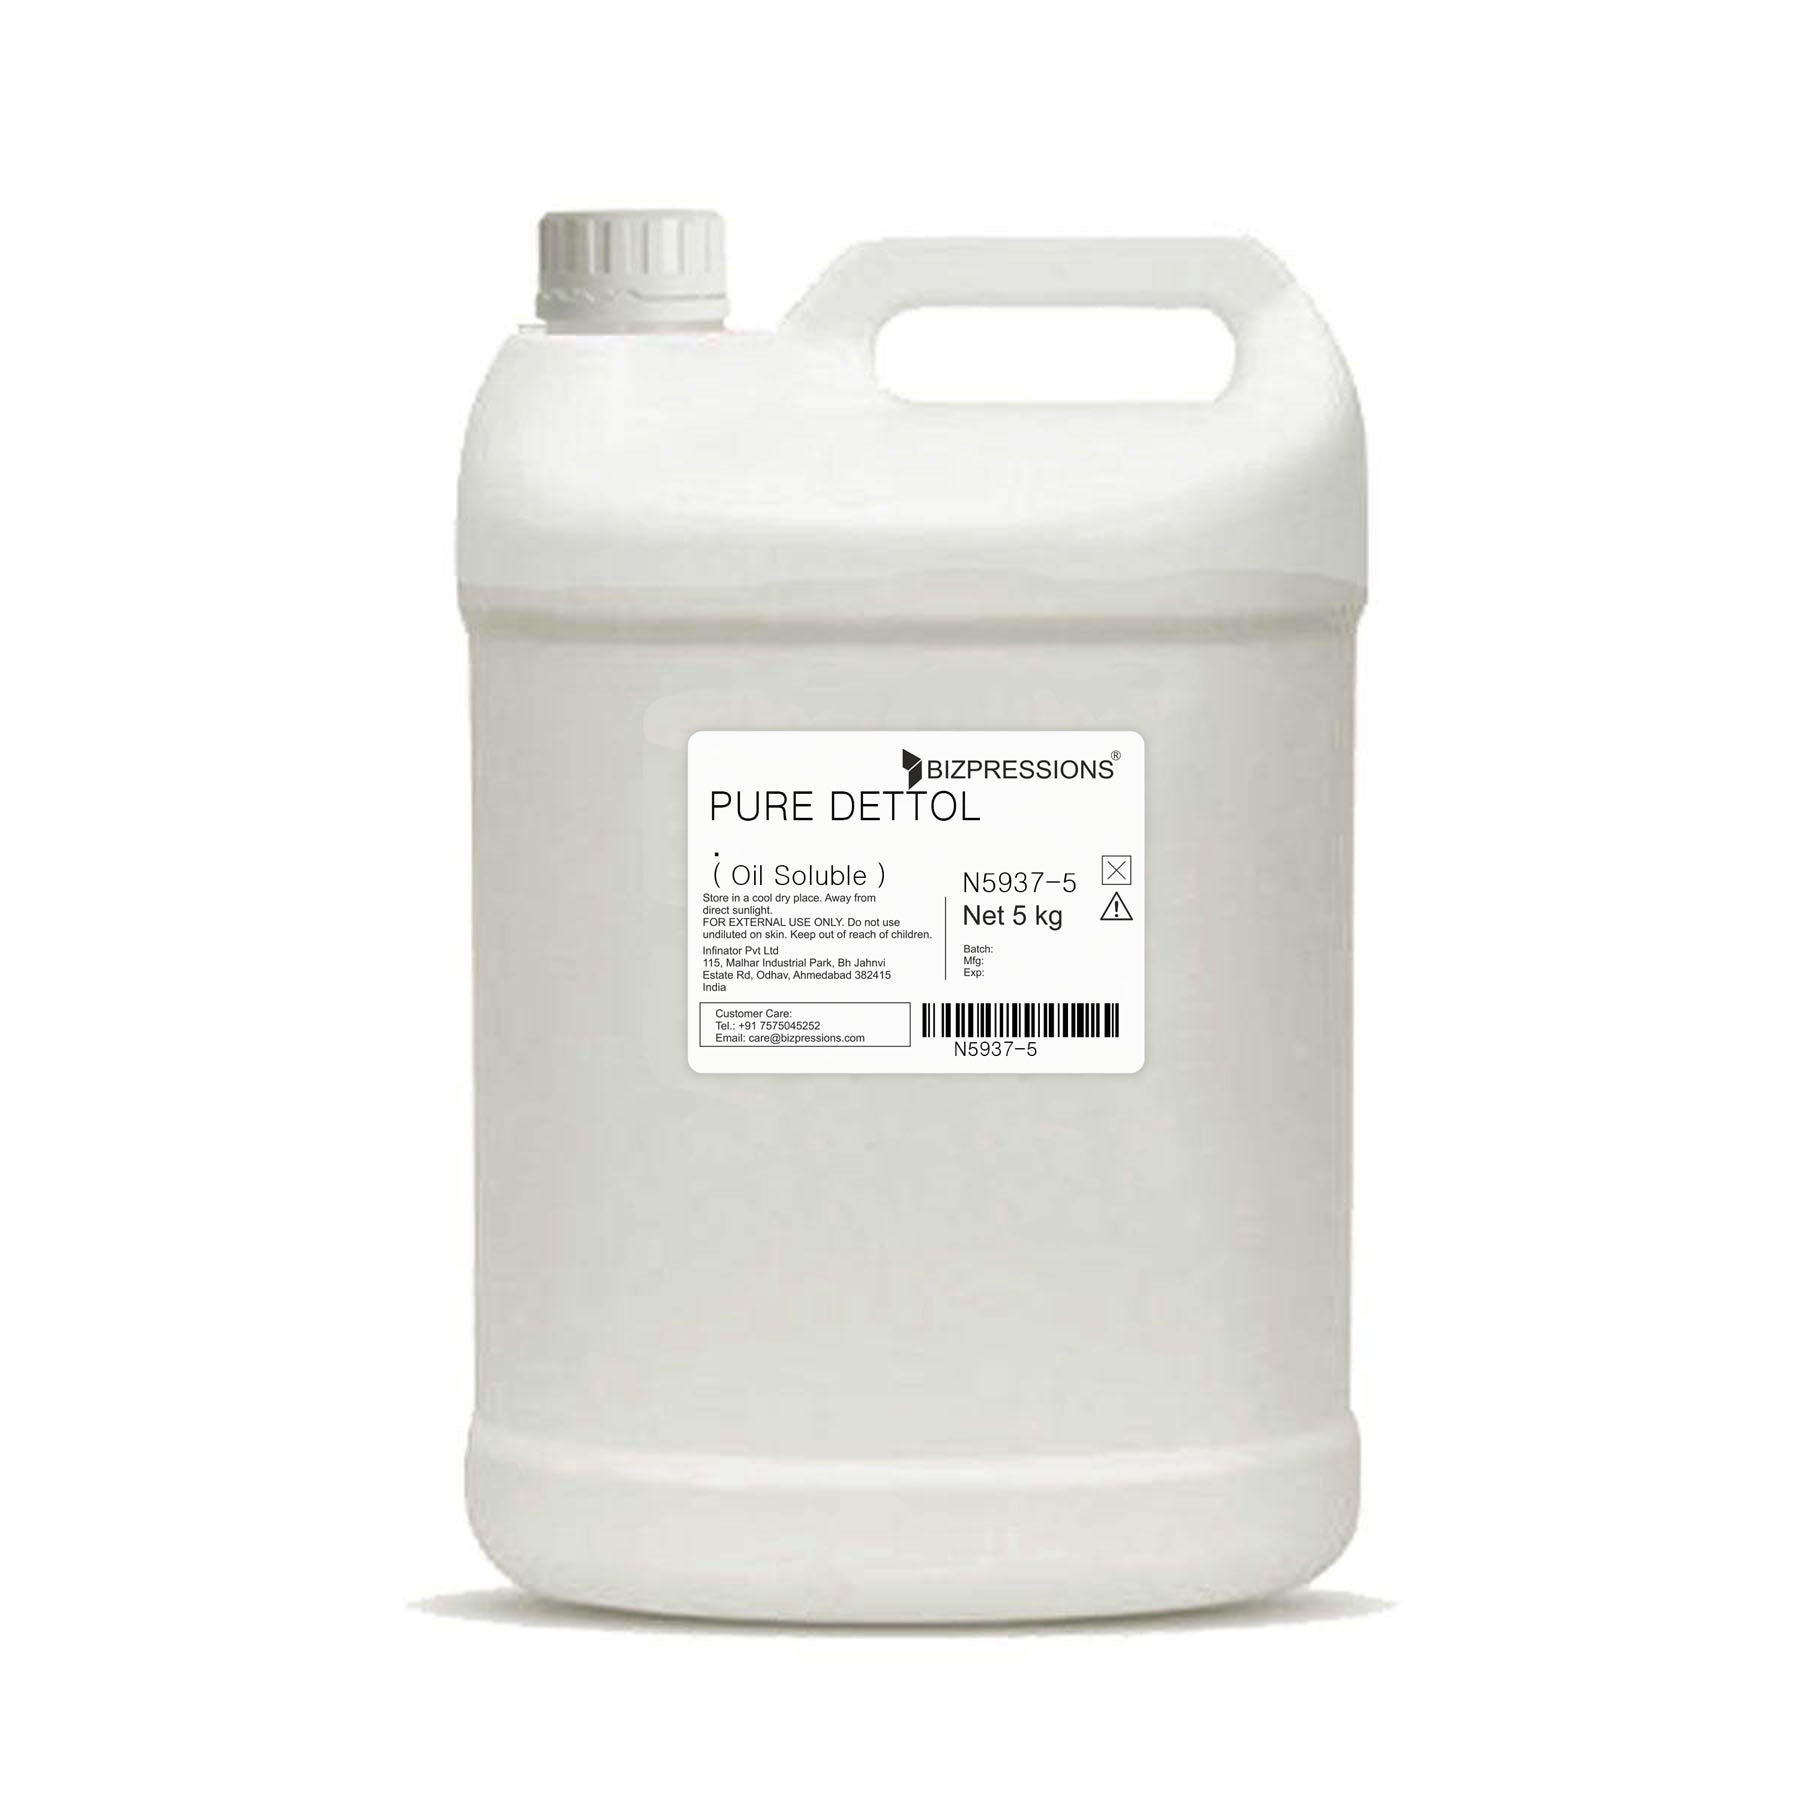 PURE DETTOL - Fragrance ( Oil Soluble ) - 5 kg